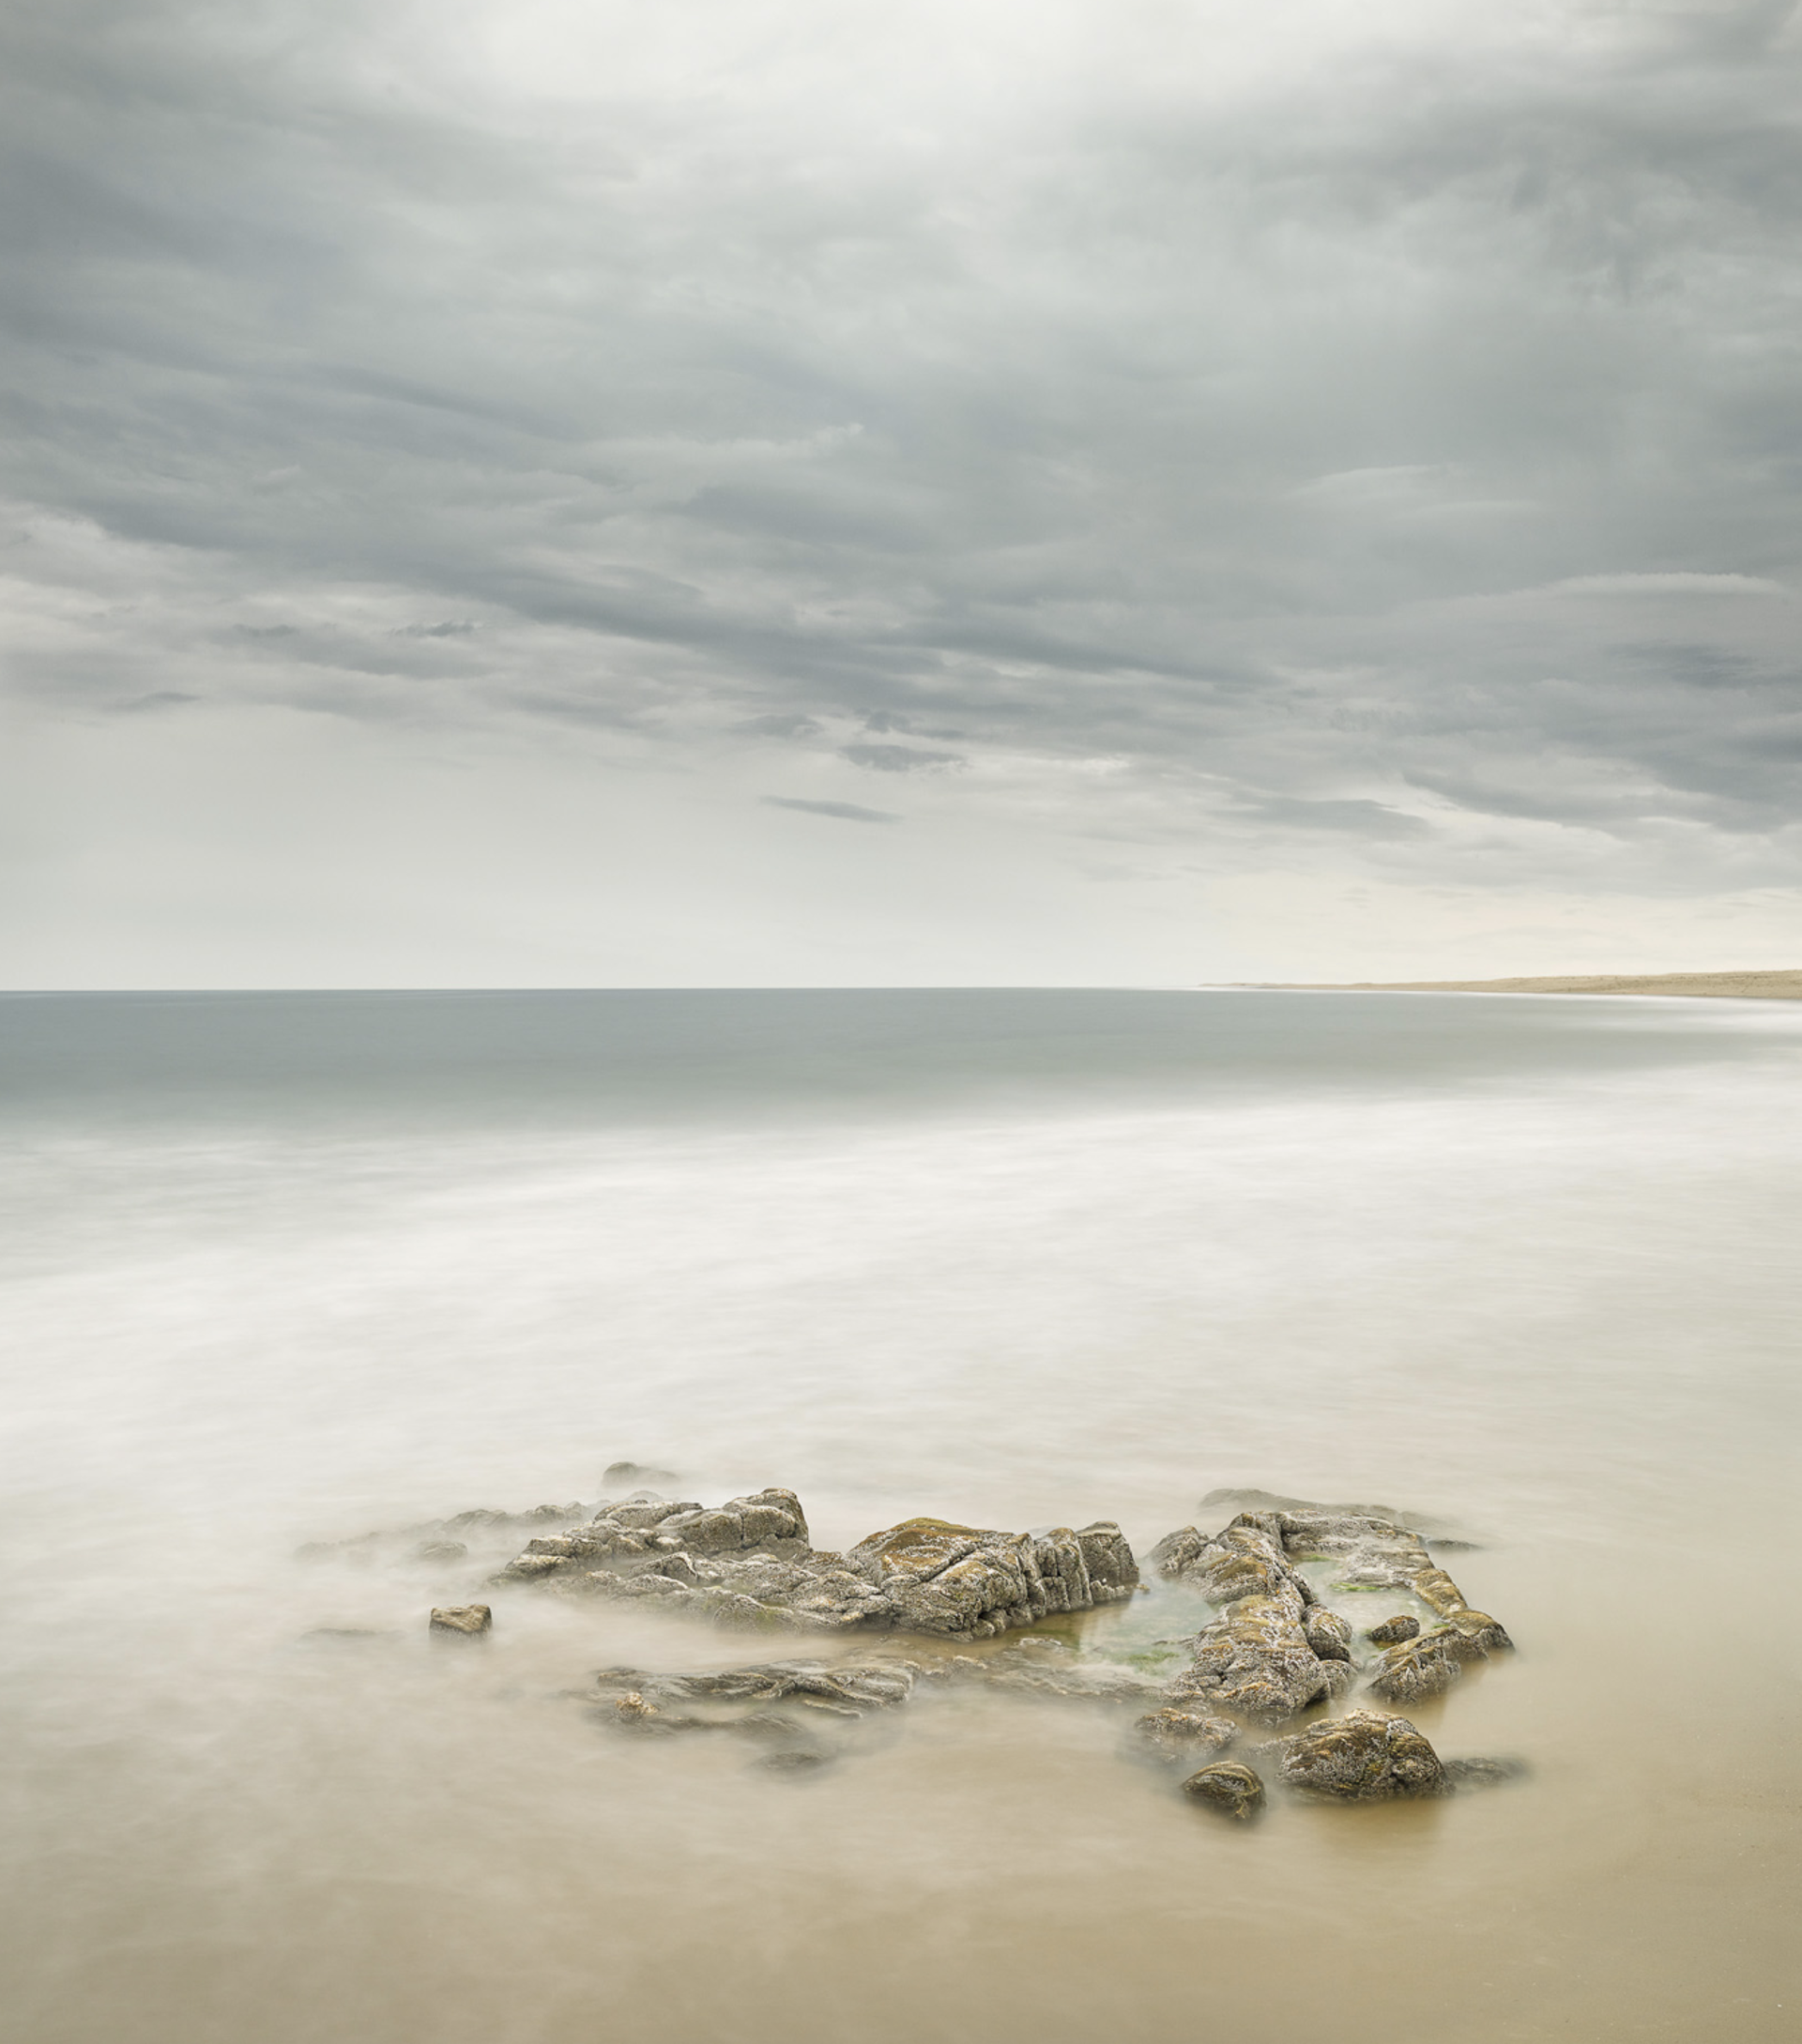 Between the Sand by Jim Westphalen